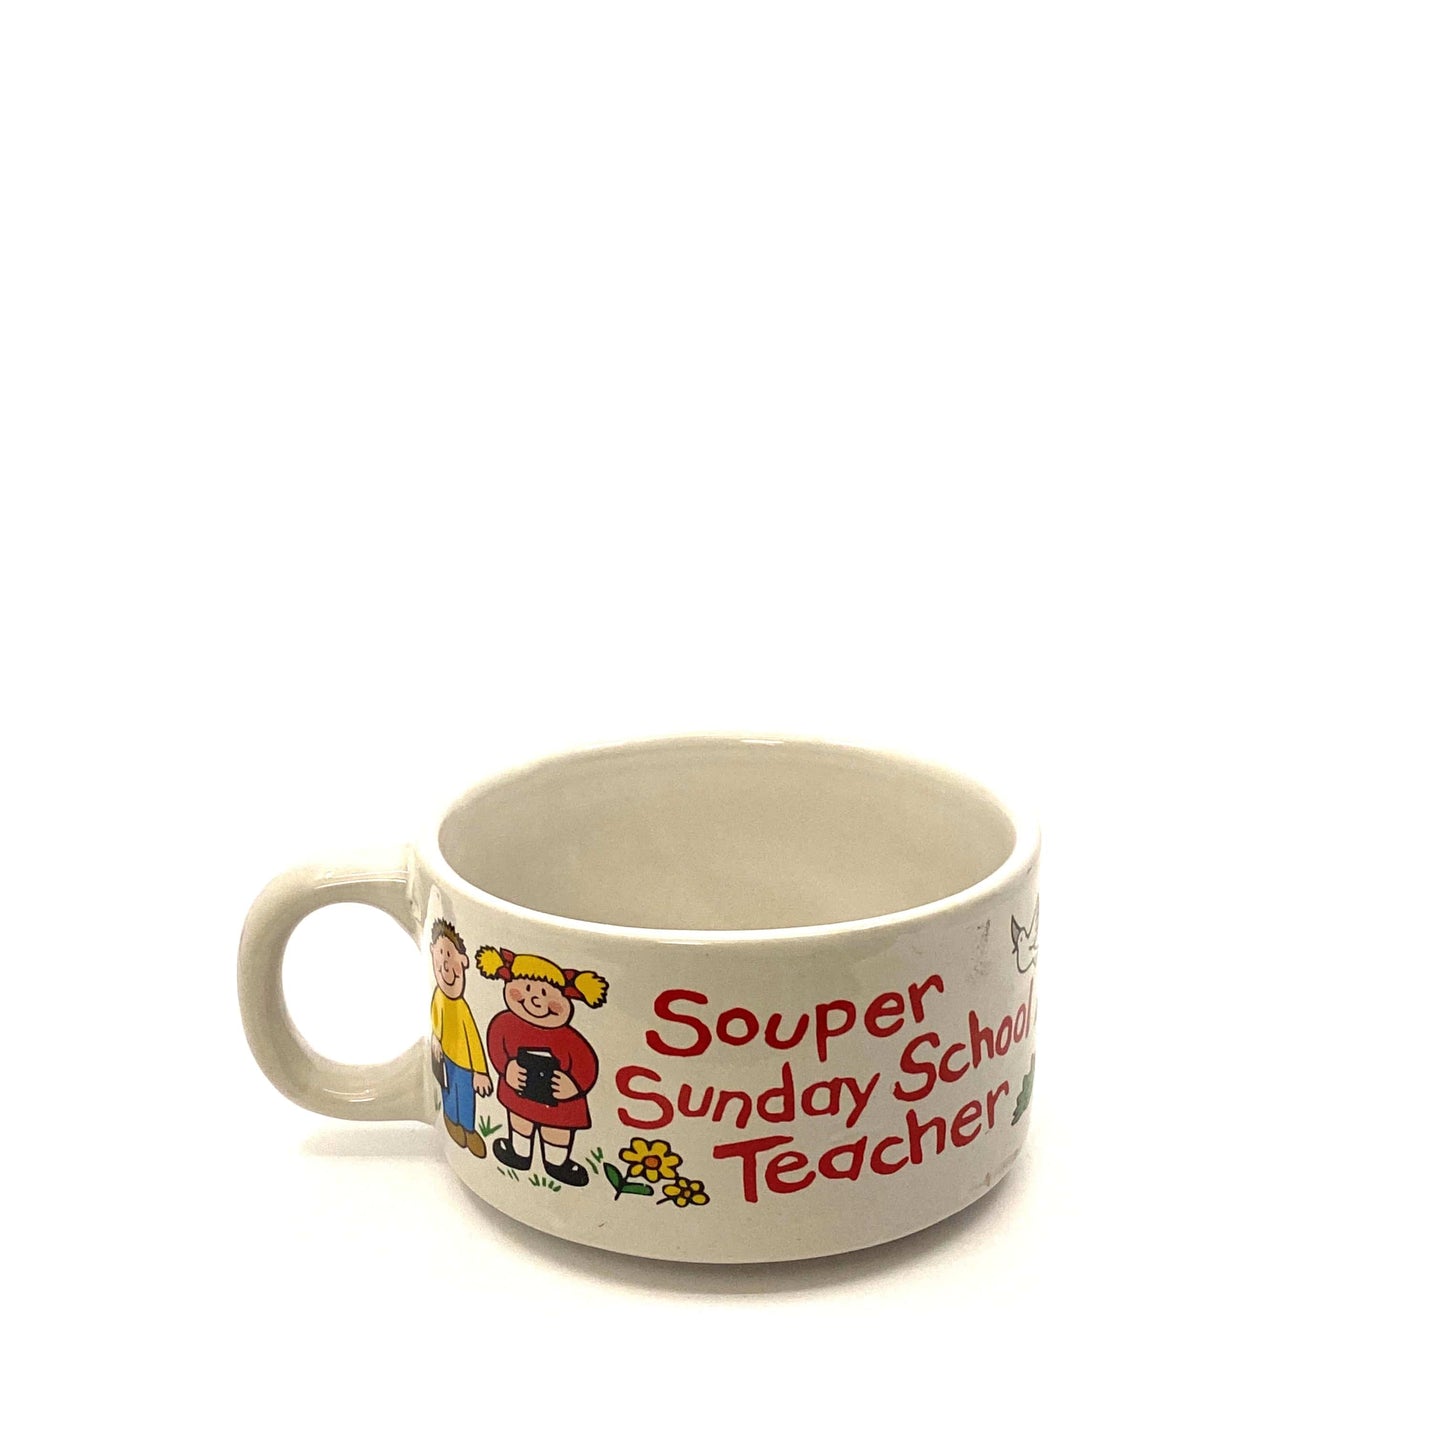 Souped Sunday School Teacher Coffee / Soup Mug White Ceramic